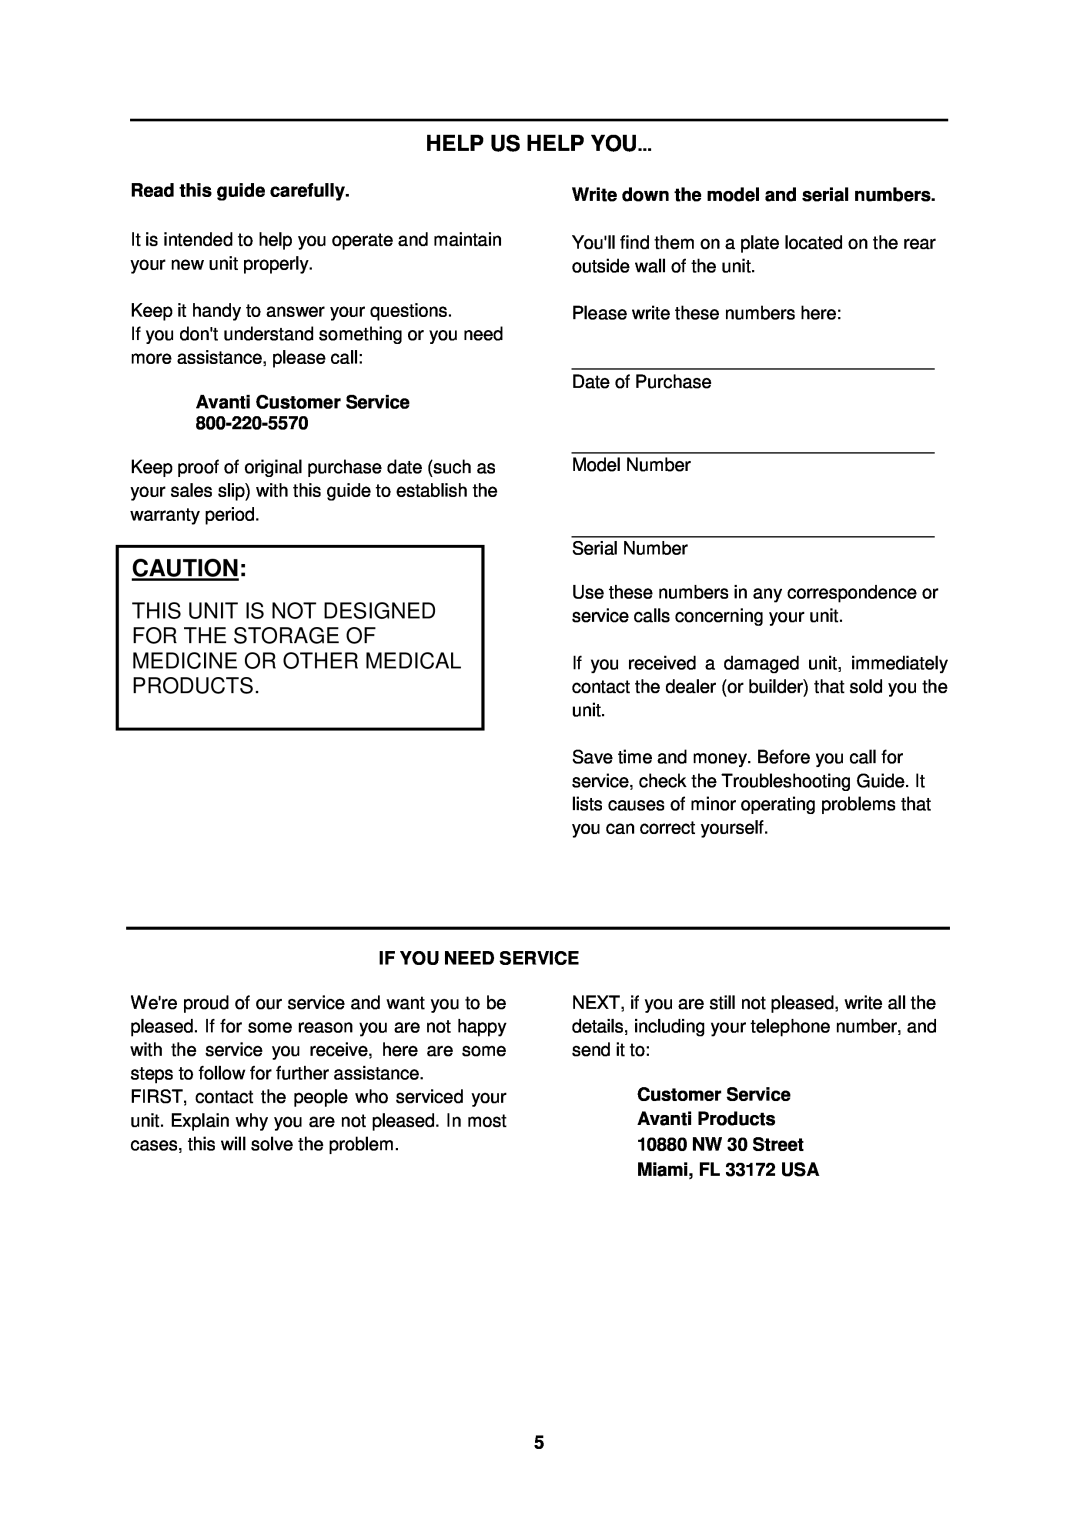 Avanti AR1733B instruction manual Help Us Help You, Read this guide carefully, Avanti Customer Service, If You Need Service 